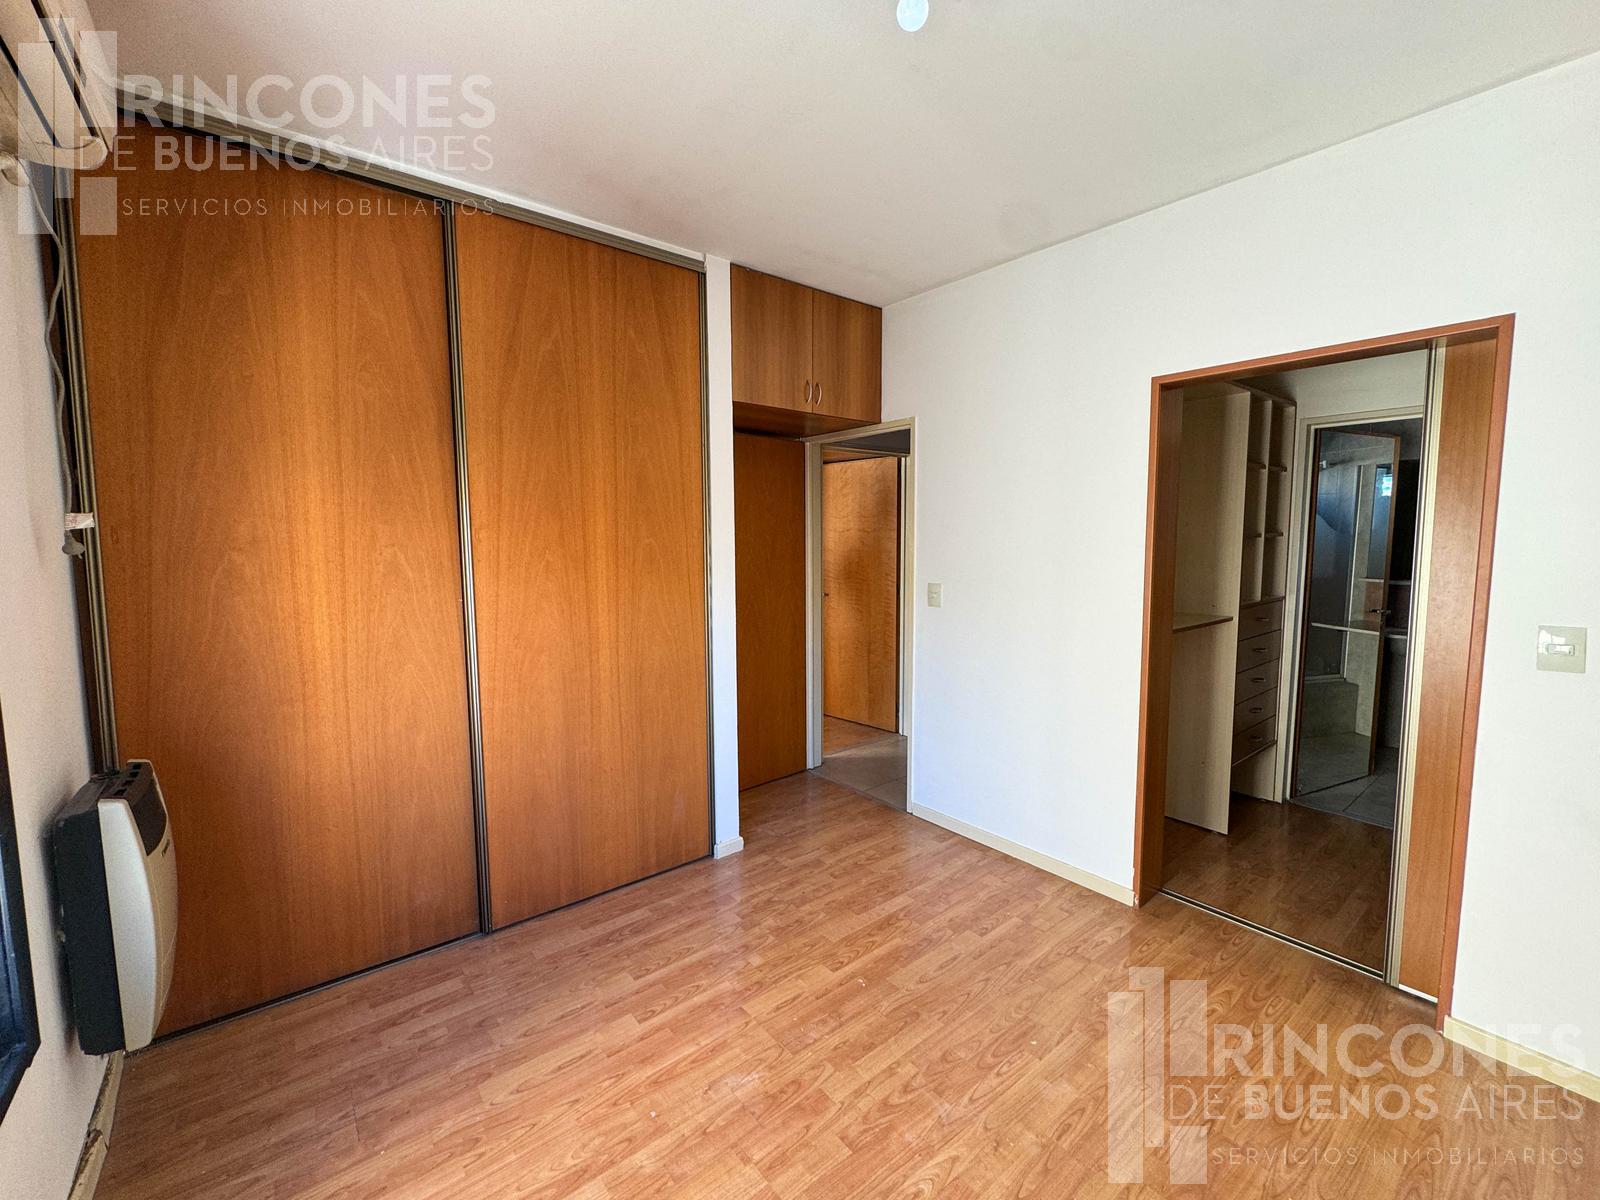 #5085630 | Rental | Apartment | San Telmo (Rincones de Buenos Aires)